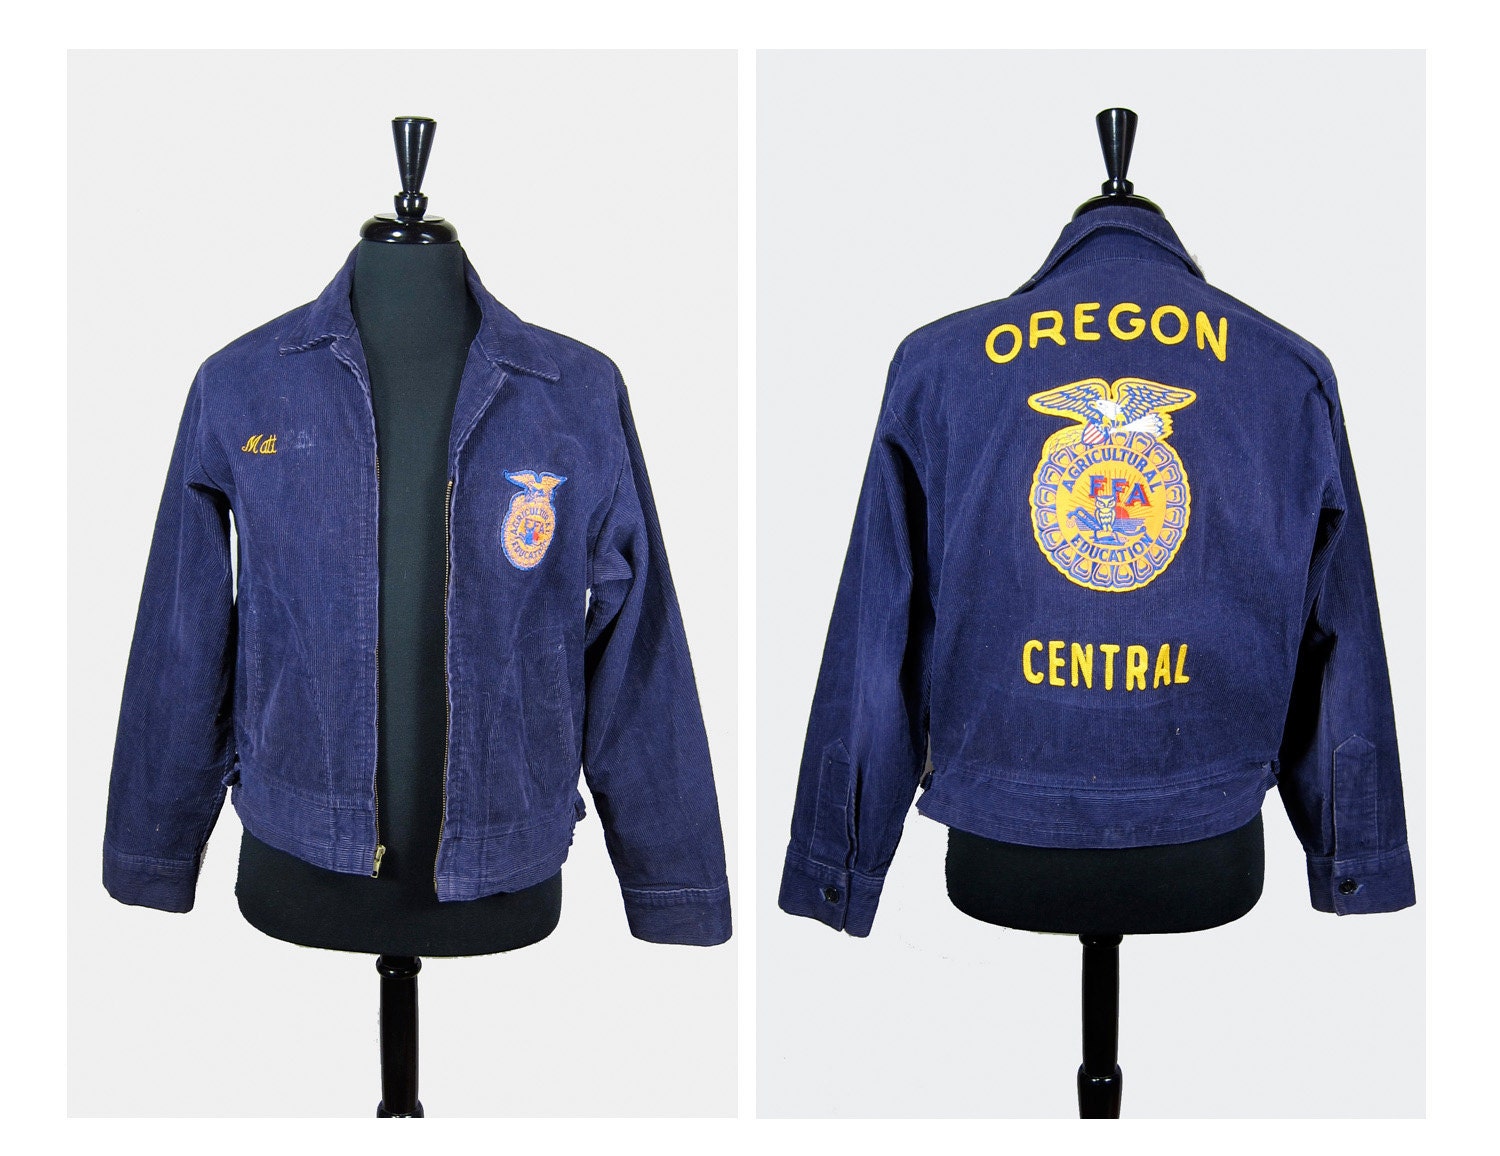 Items similar to Vtg 1980's Blue Corduroy FFA Oregon Jacket